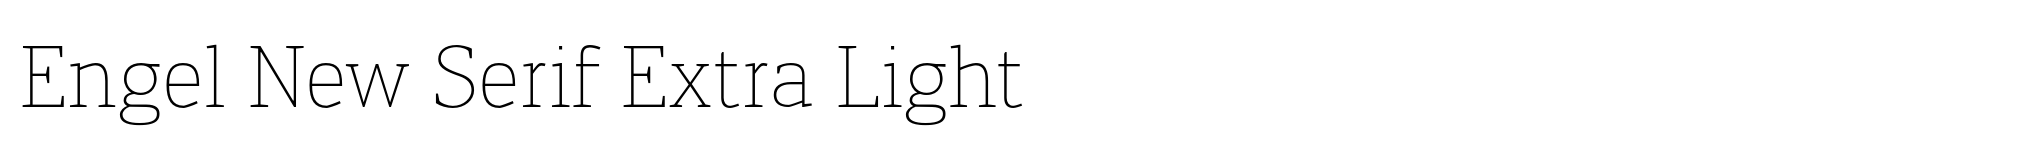 Engel New Serif Extra Light image